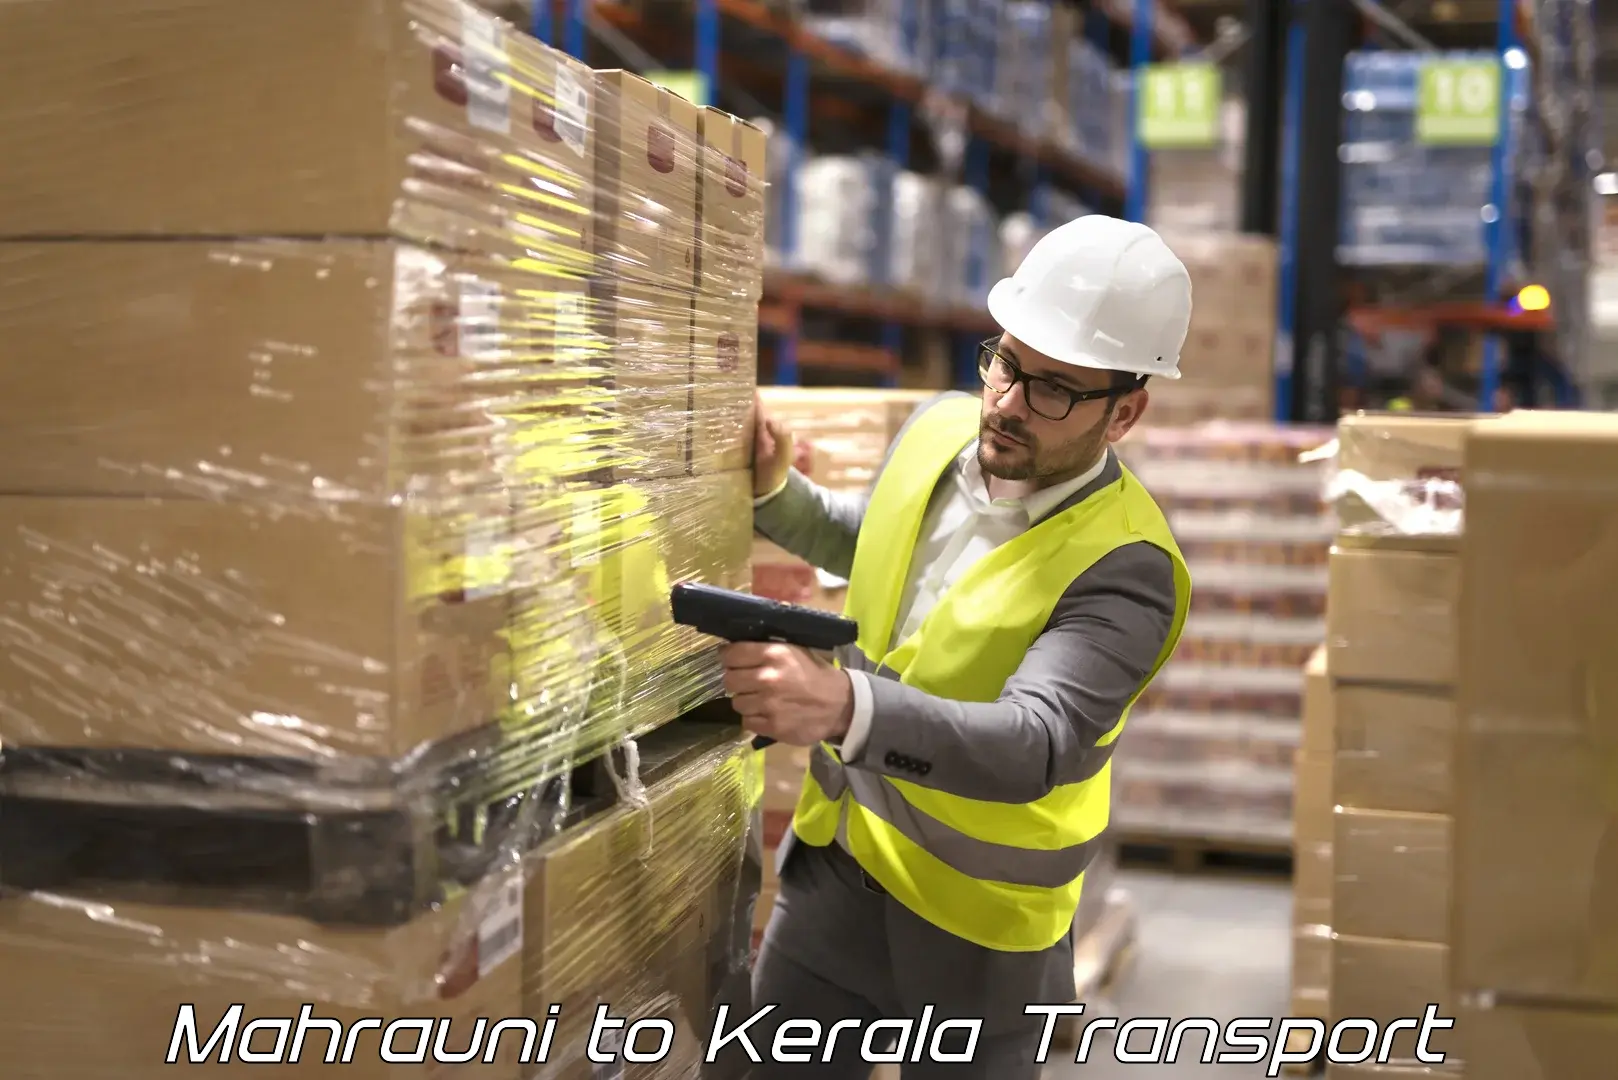 Transport in sharing Mahrauni to Kerala